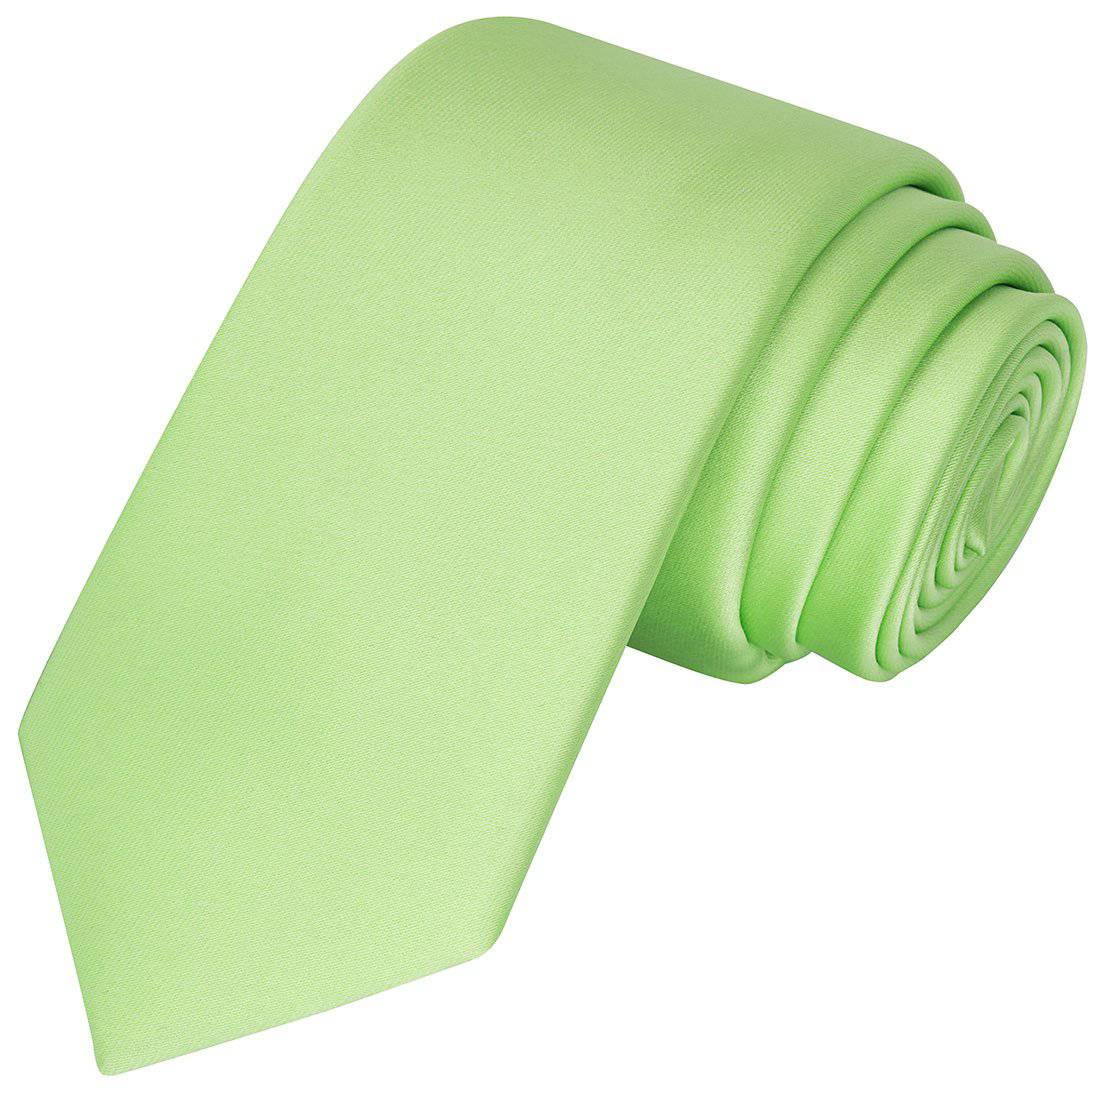 Lime Green Satin Tie - Tie, bowtie, pocket square  | Kissties